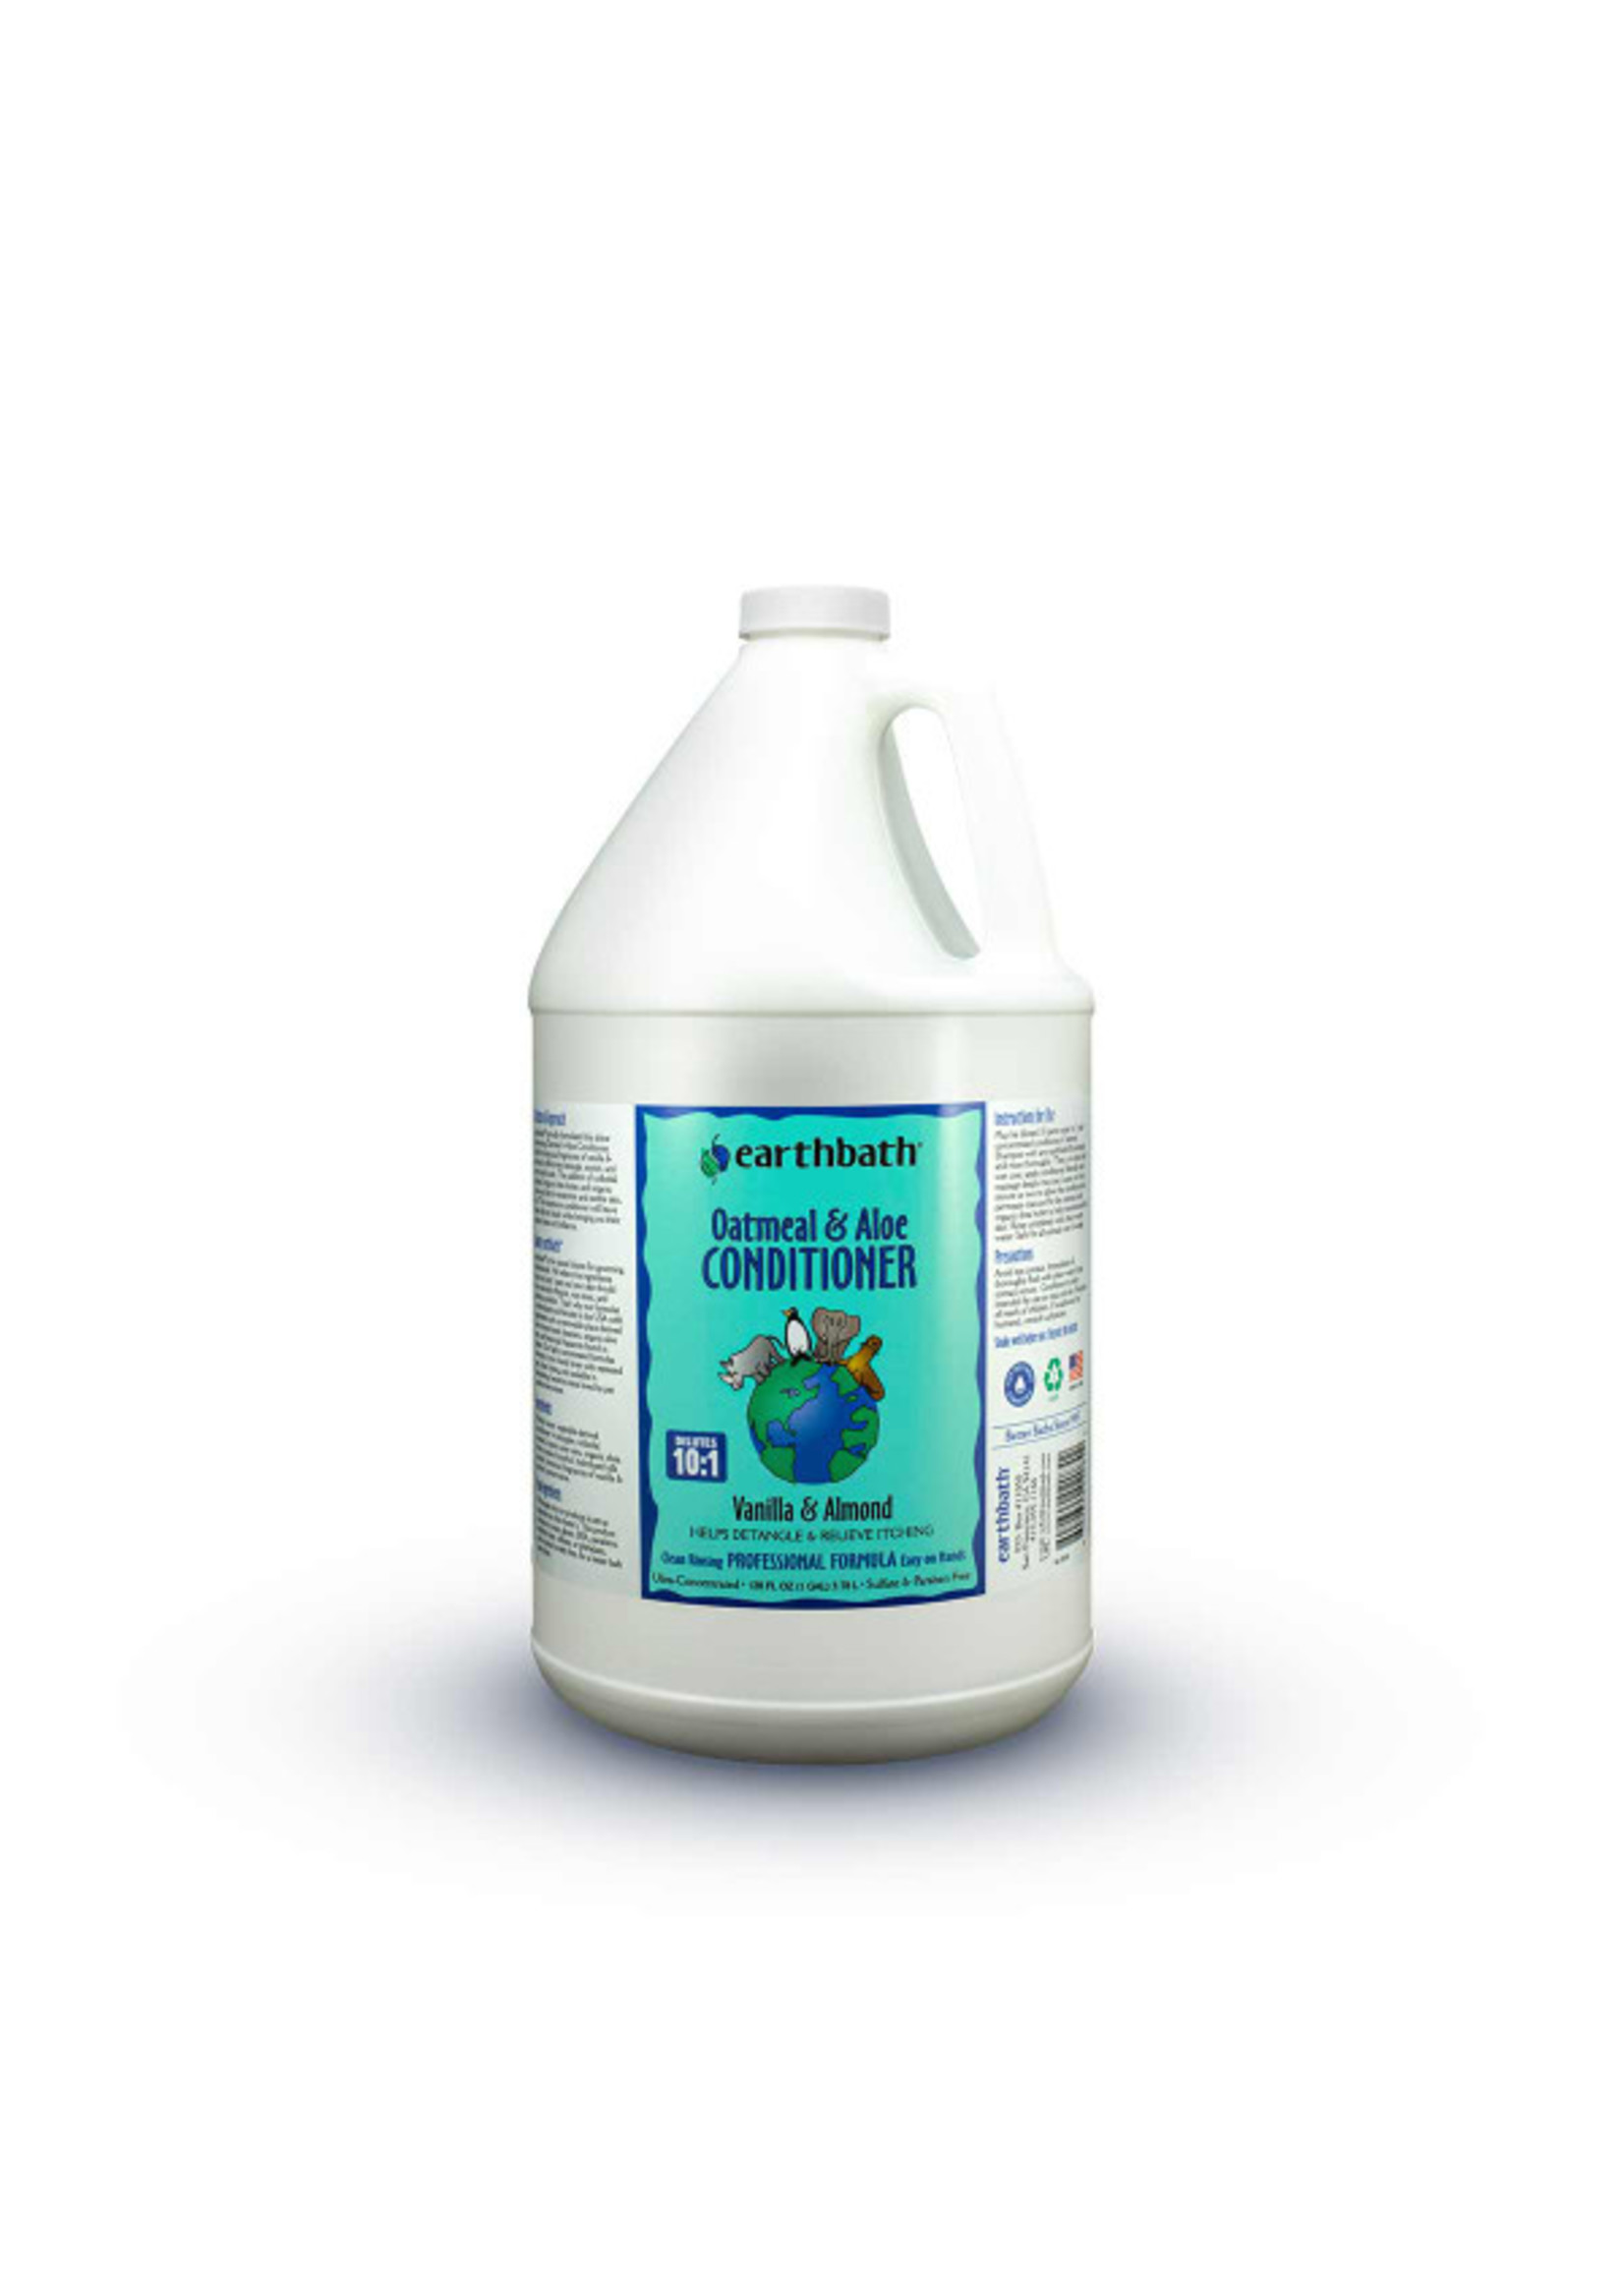 Earthbath Earthbath Oatmeat & Aloe Conditioner Fragrance free 1 Gallon